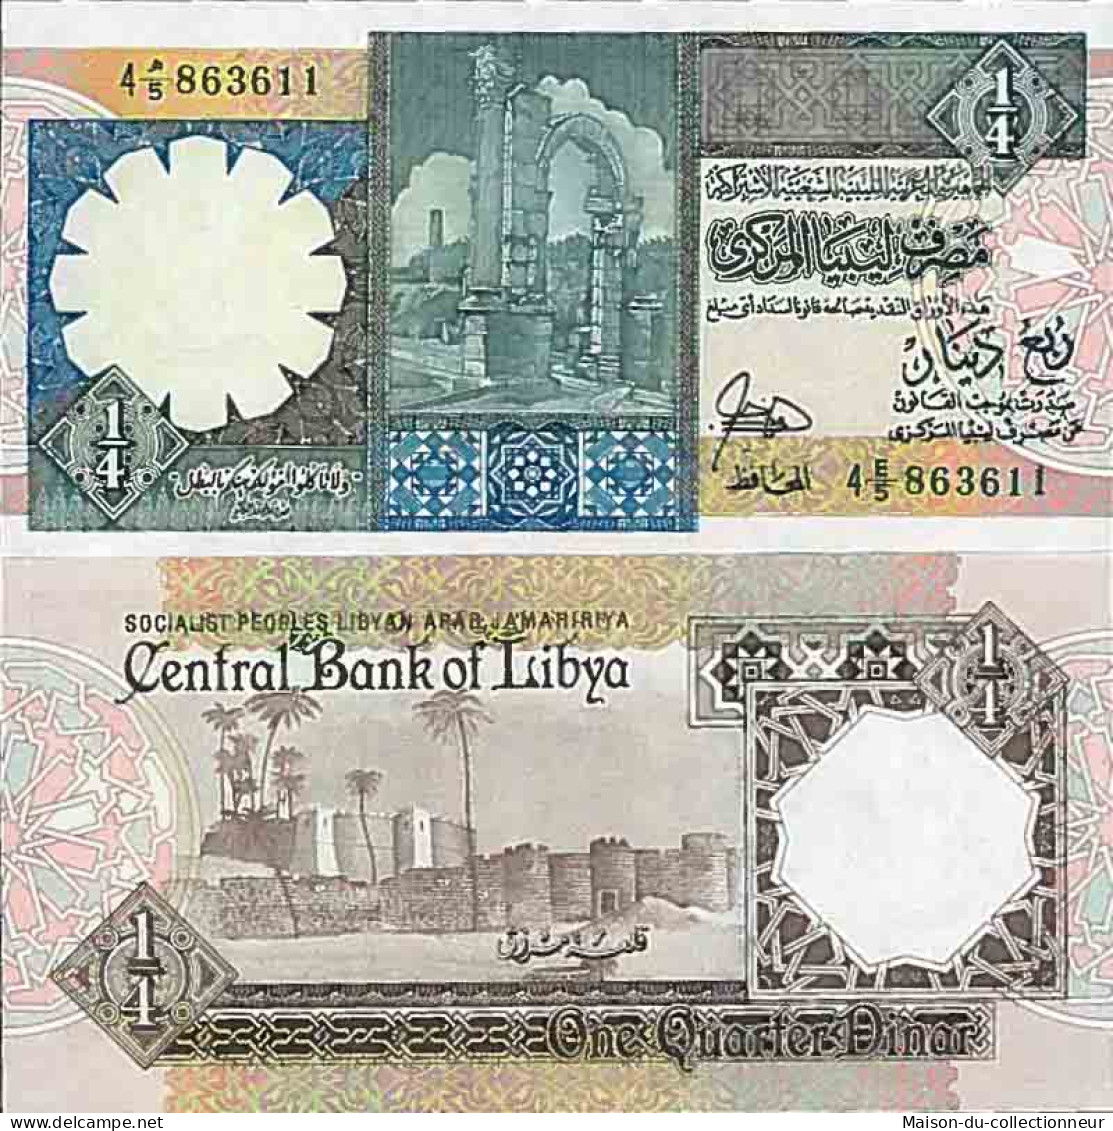 Billet De Banque Collection Libye - PK N° 52 - 1/4 Dinar - Libyen